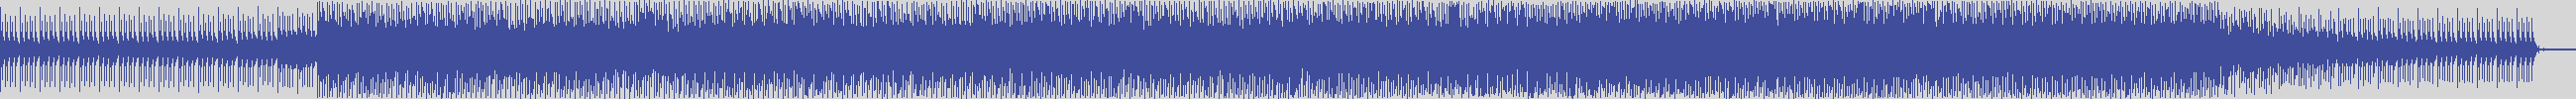 vitti_records [VIT012] Aware Project - Unlock [Original Mix] audio wave form